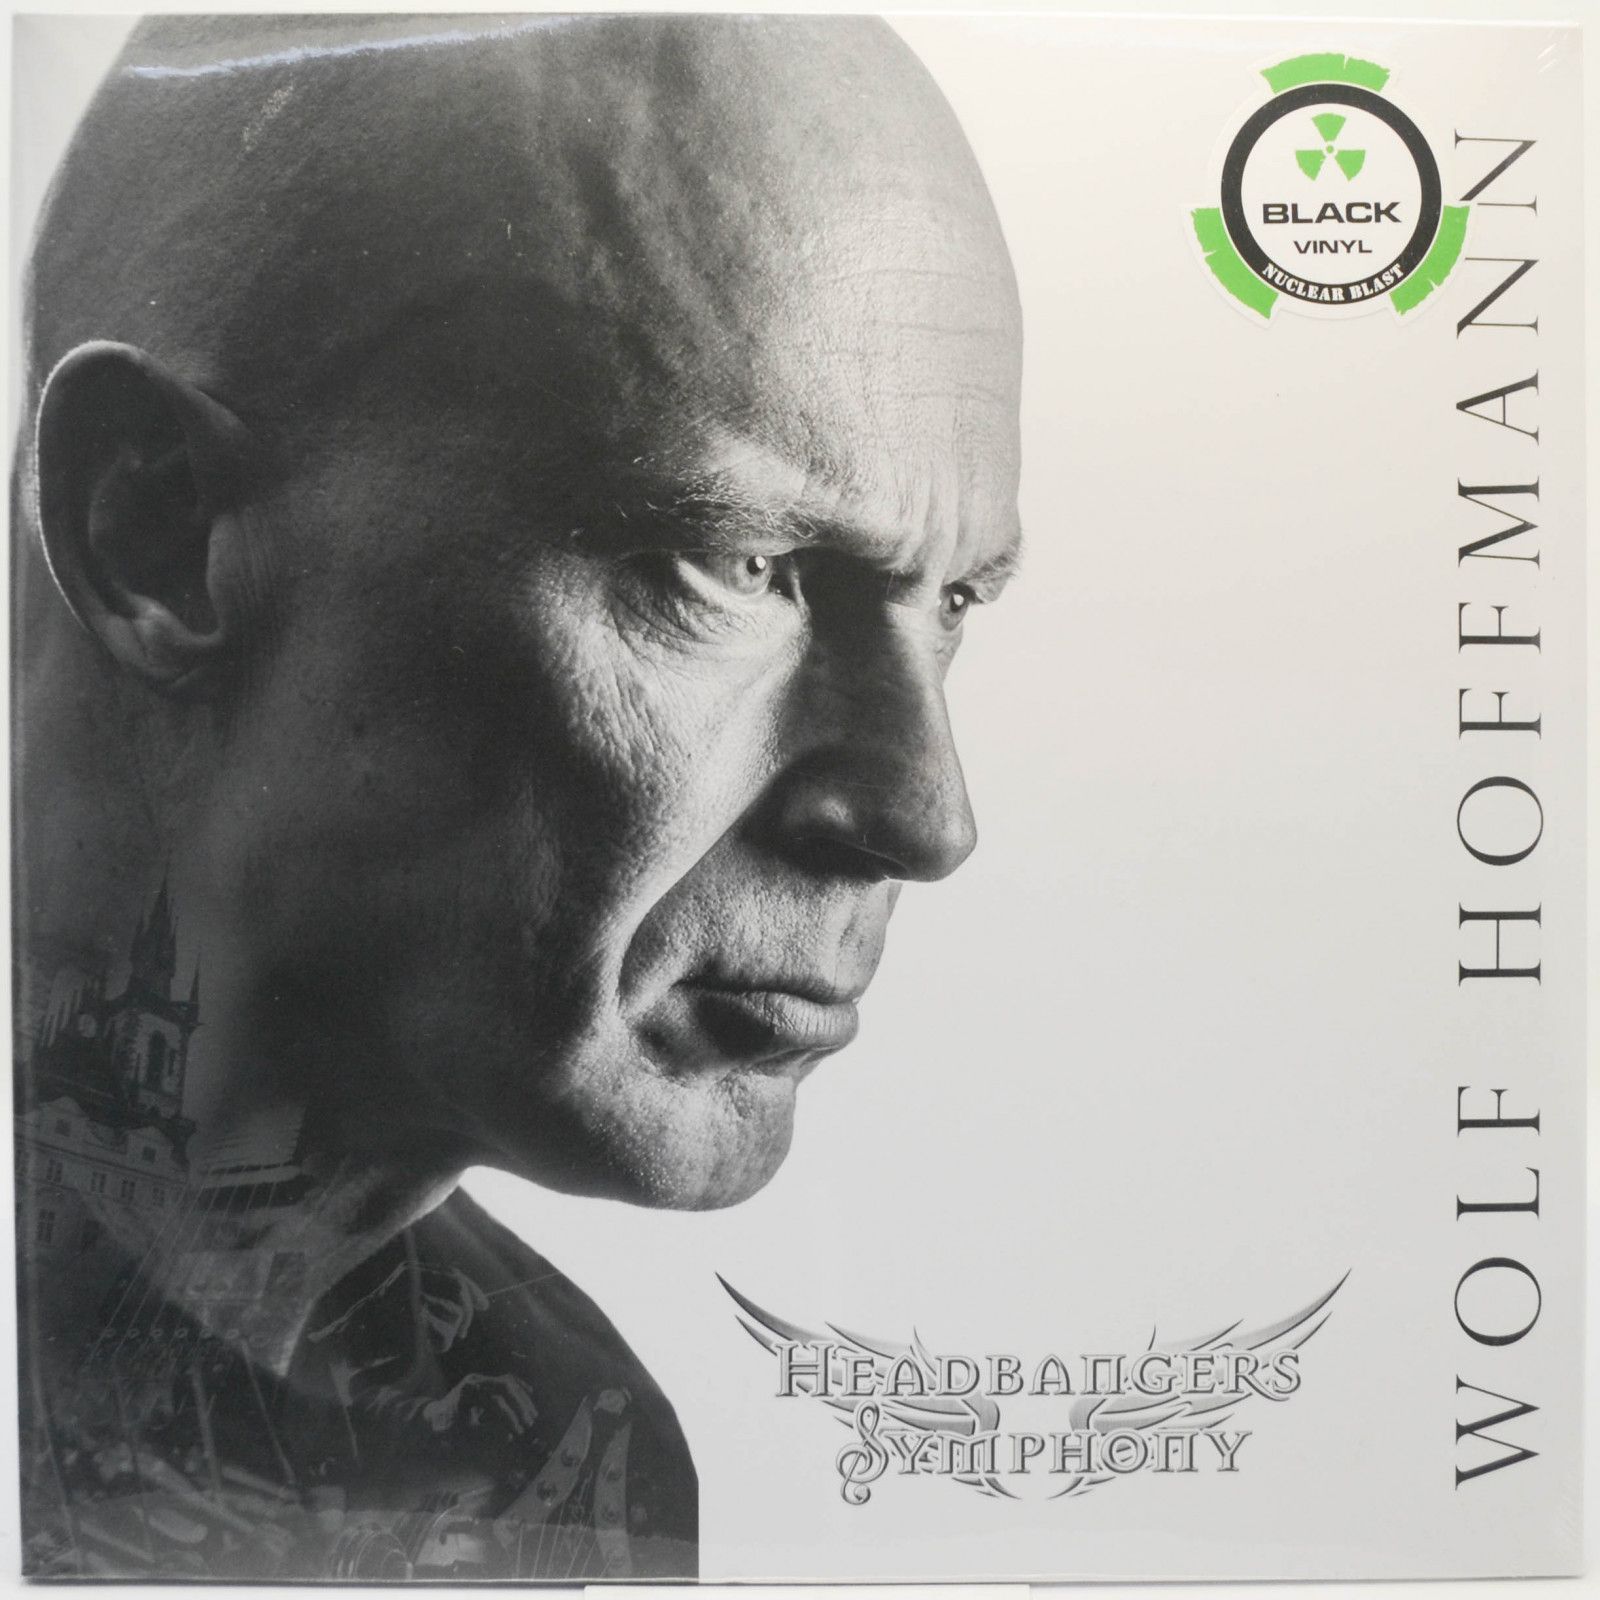 Wolf Hoffmann — Headbangers Symphony, 2016